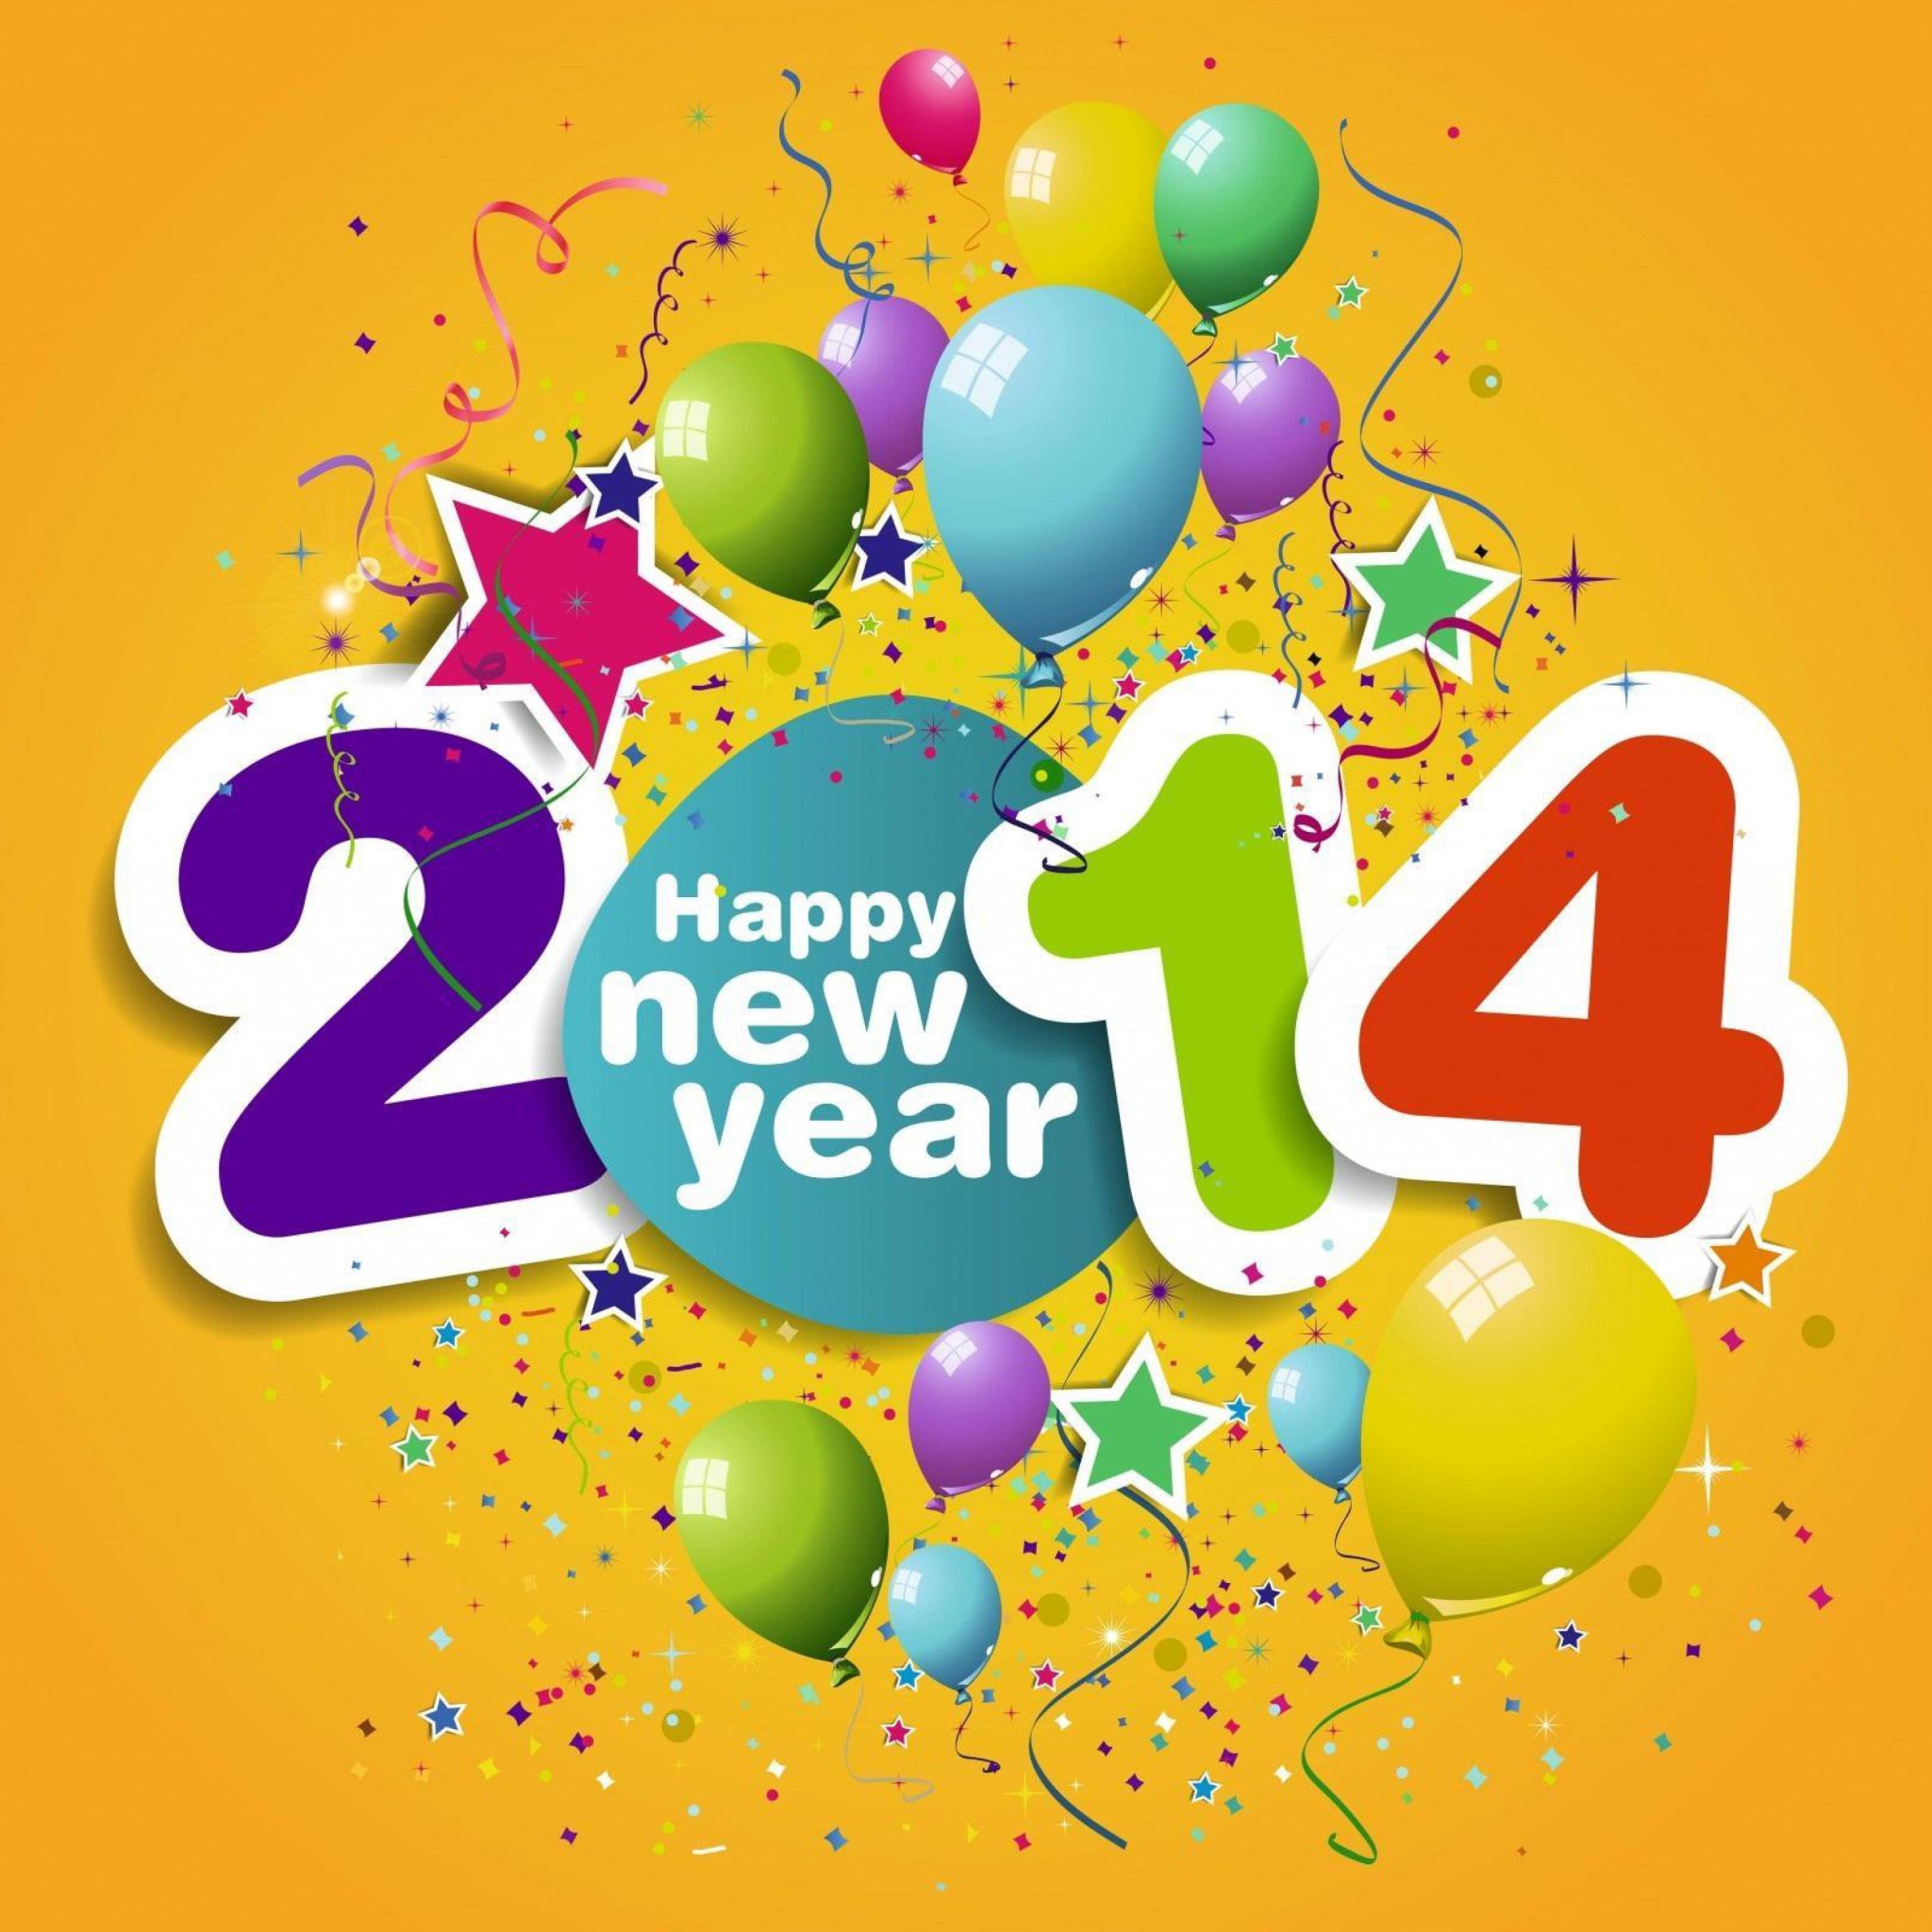 Happy New Year 2014 wallpaper 2048x2048